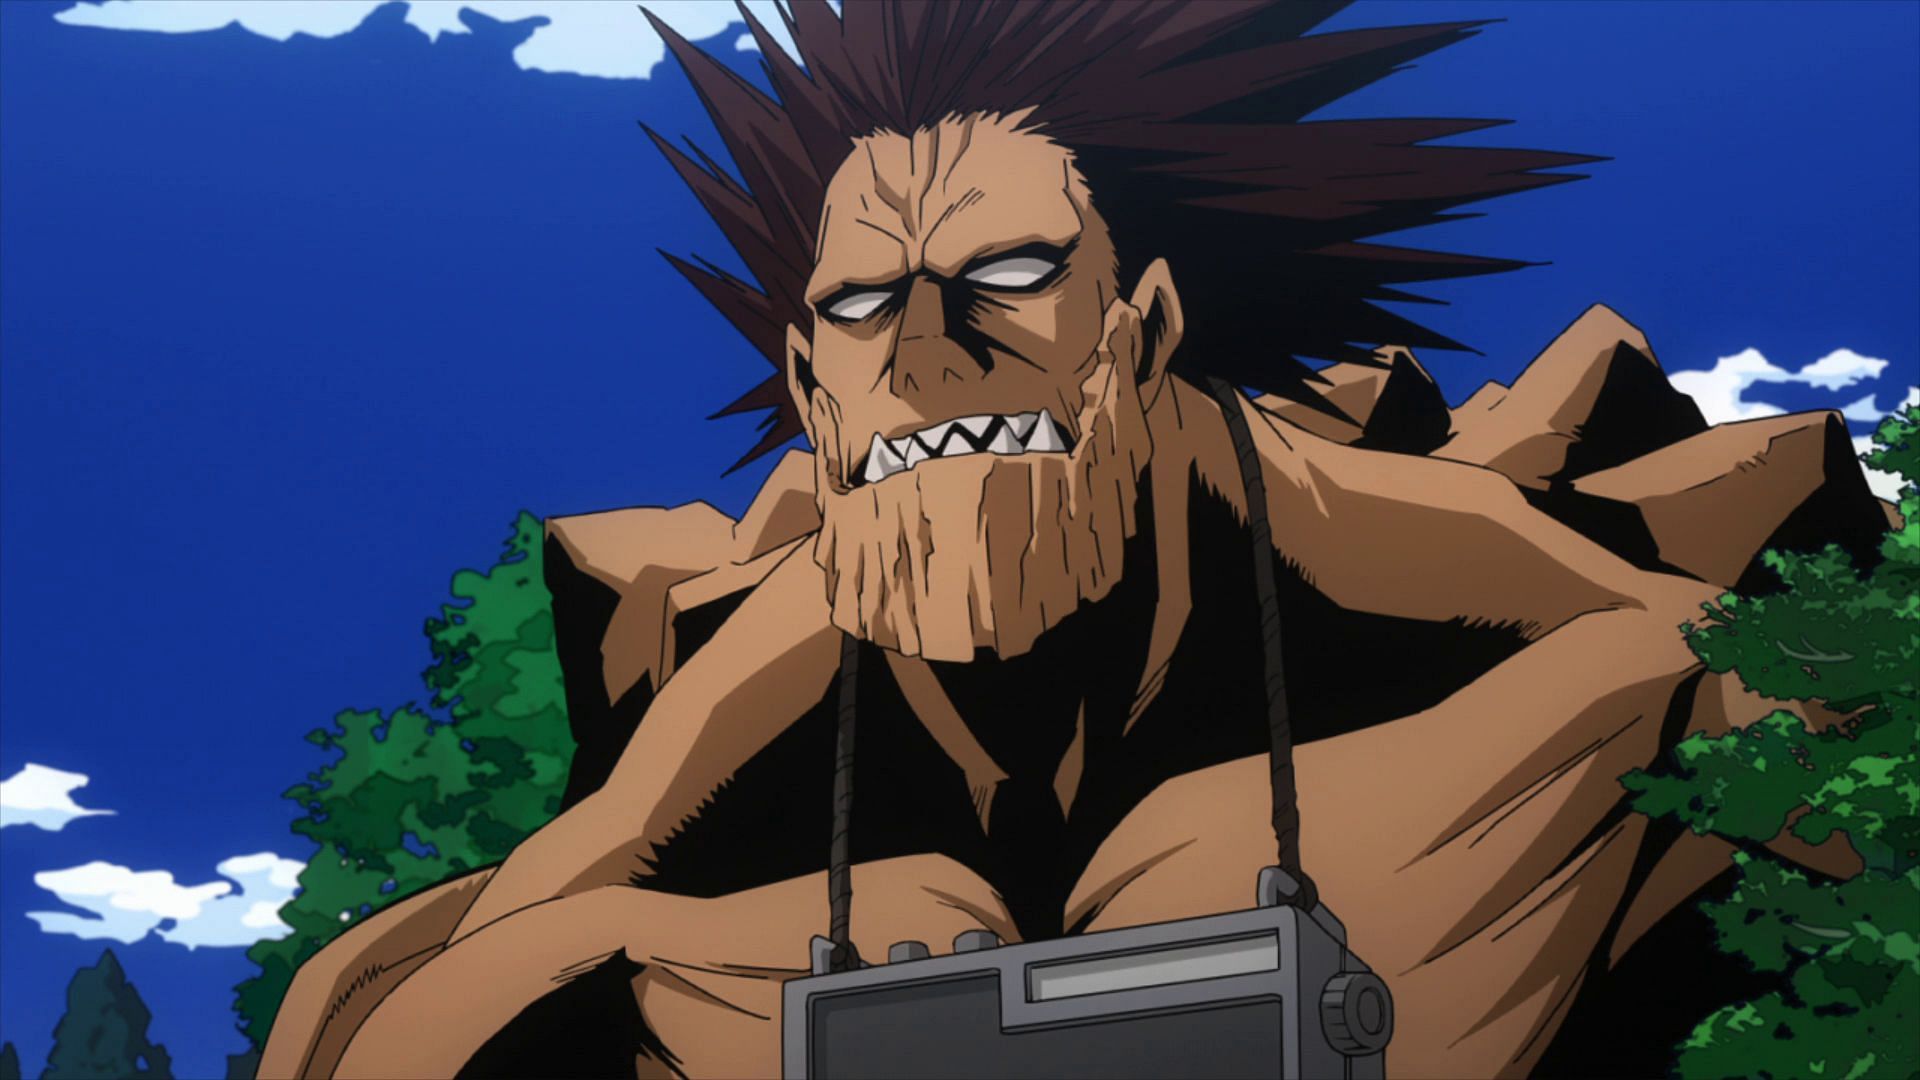 The villain Gigantomachia as he appears in the anime (Image via Studio Bones)